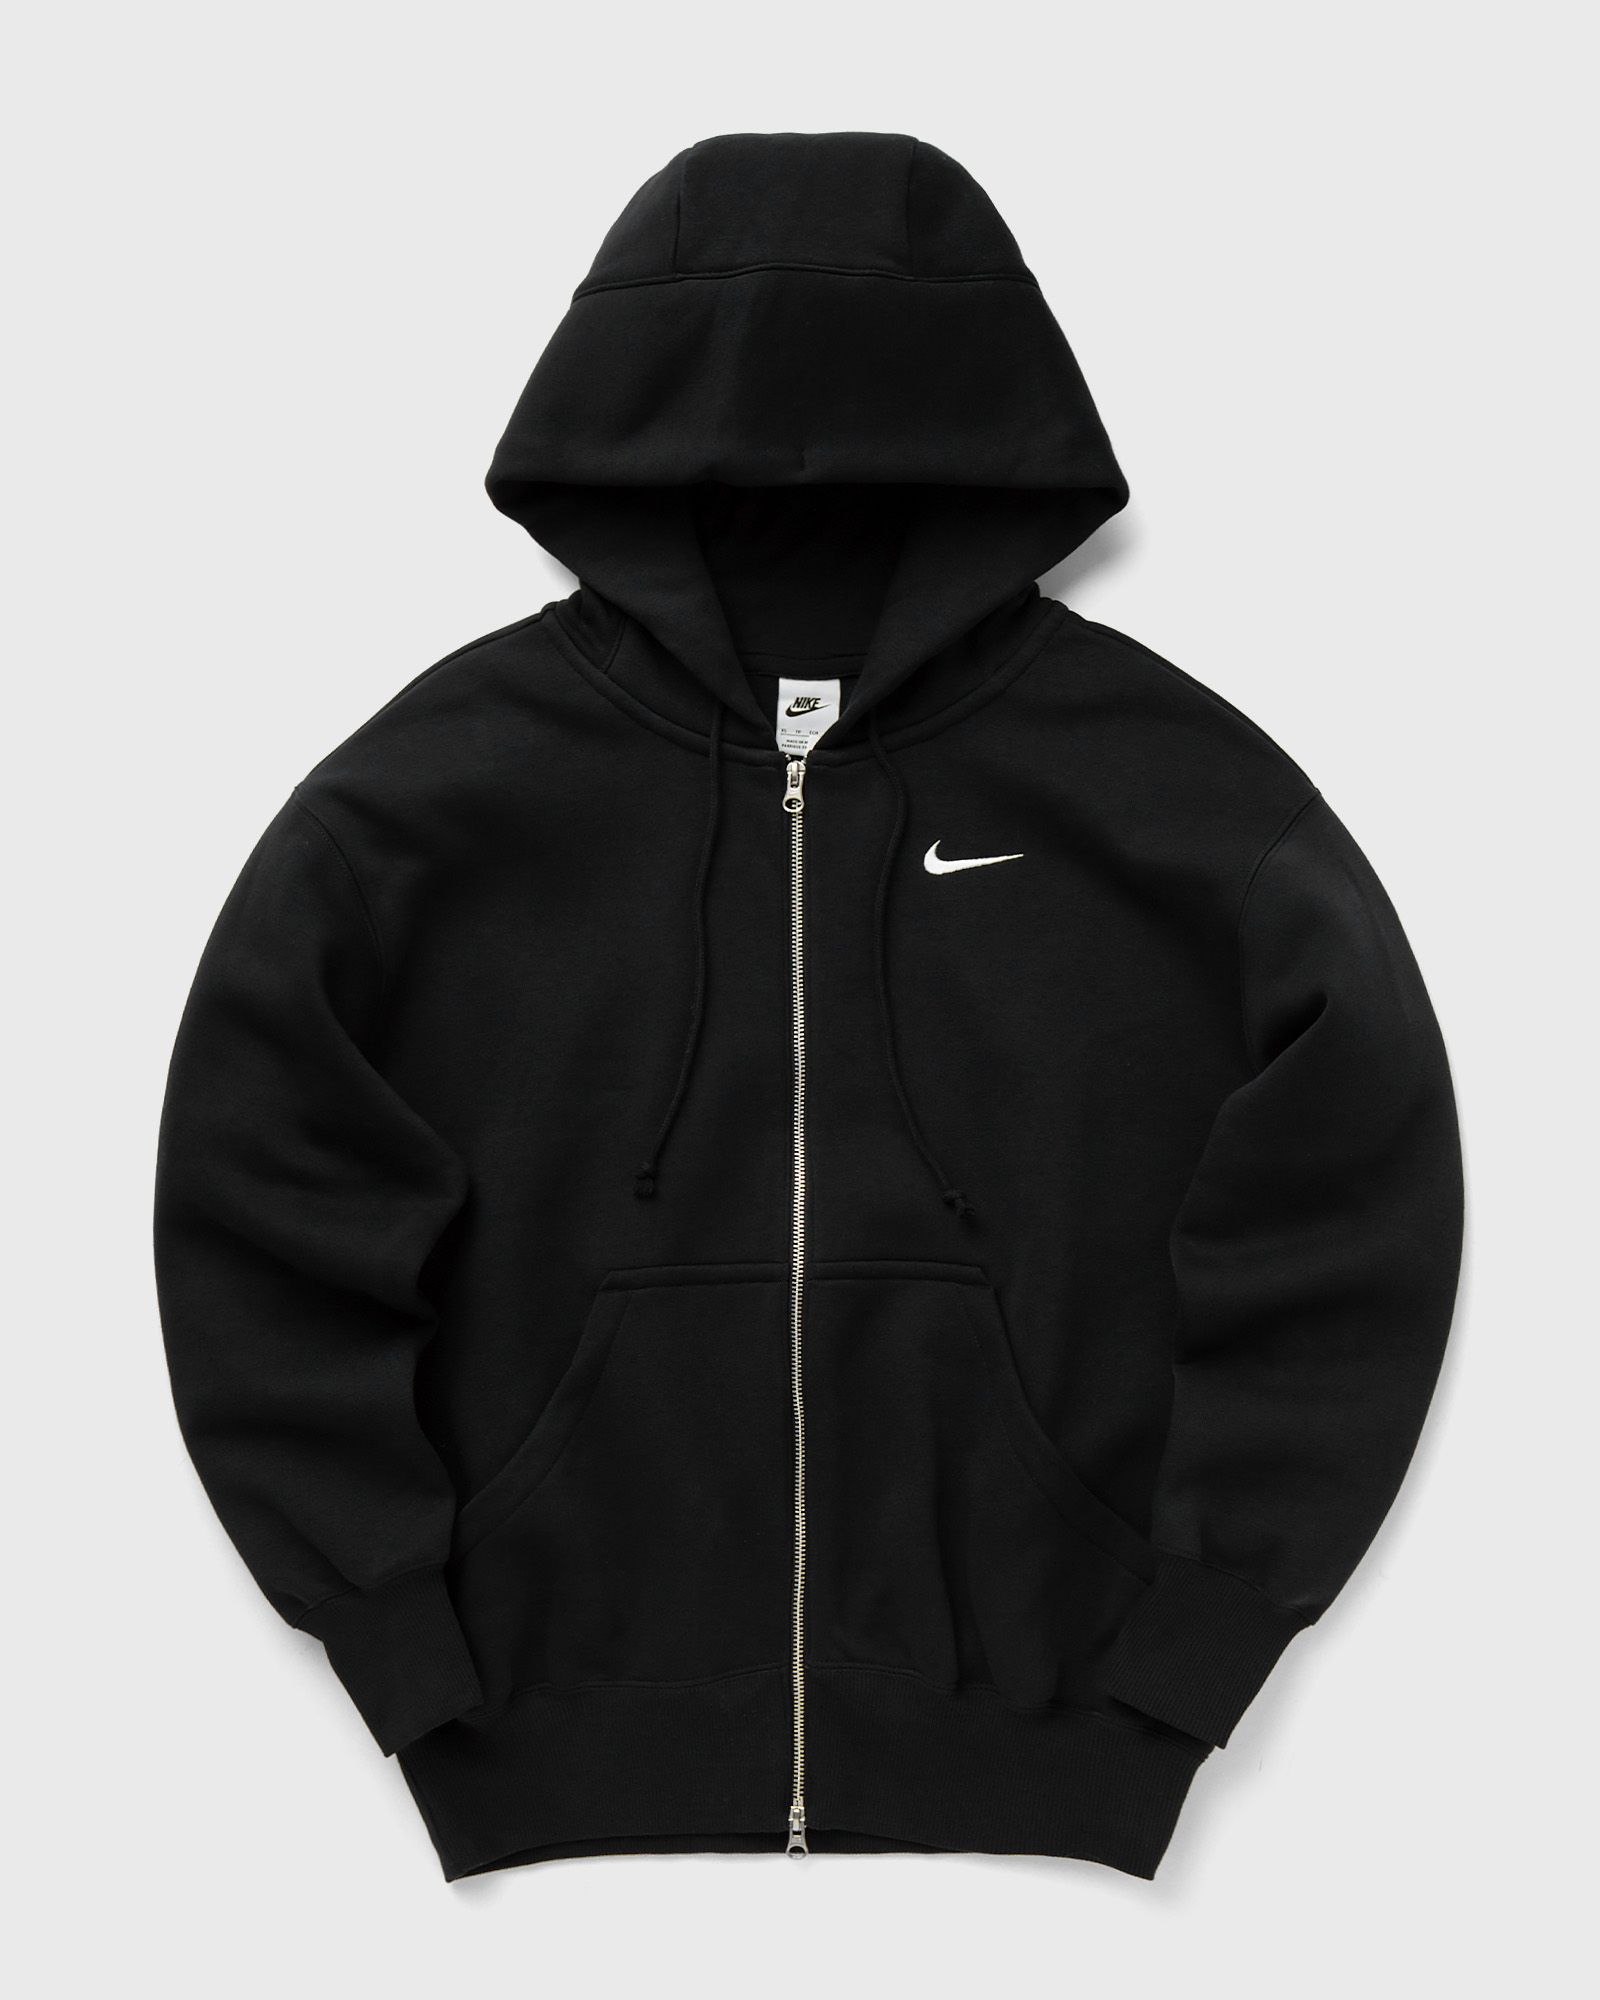 Nike WMNS Phoenix Fleece Oversized Full-Zip Hoodie women Hoodies|Zippers black in Größe:M von Nike